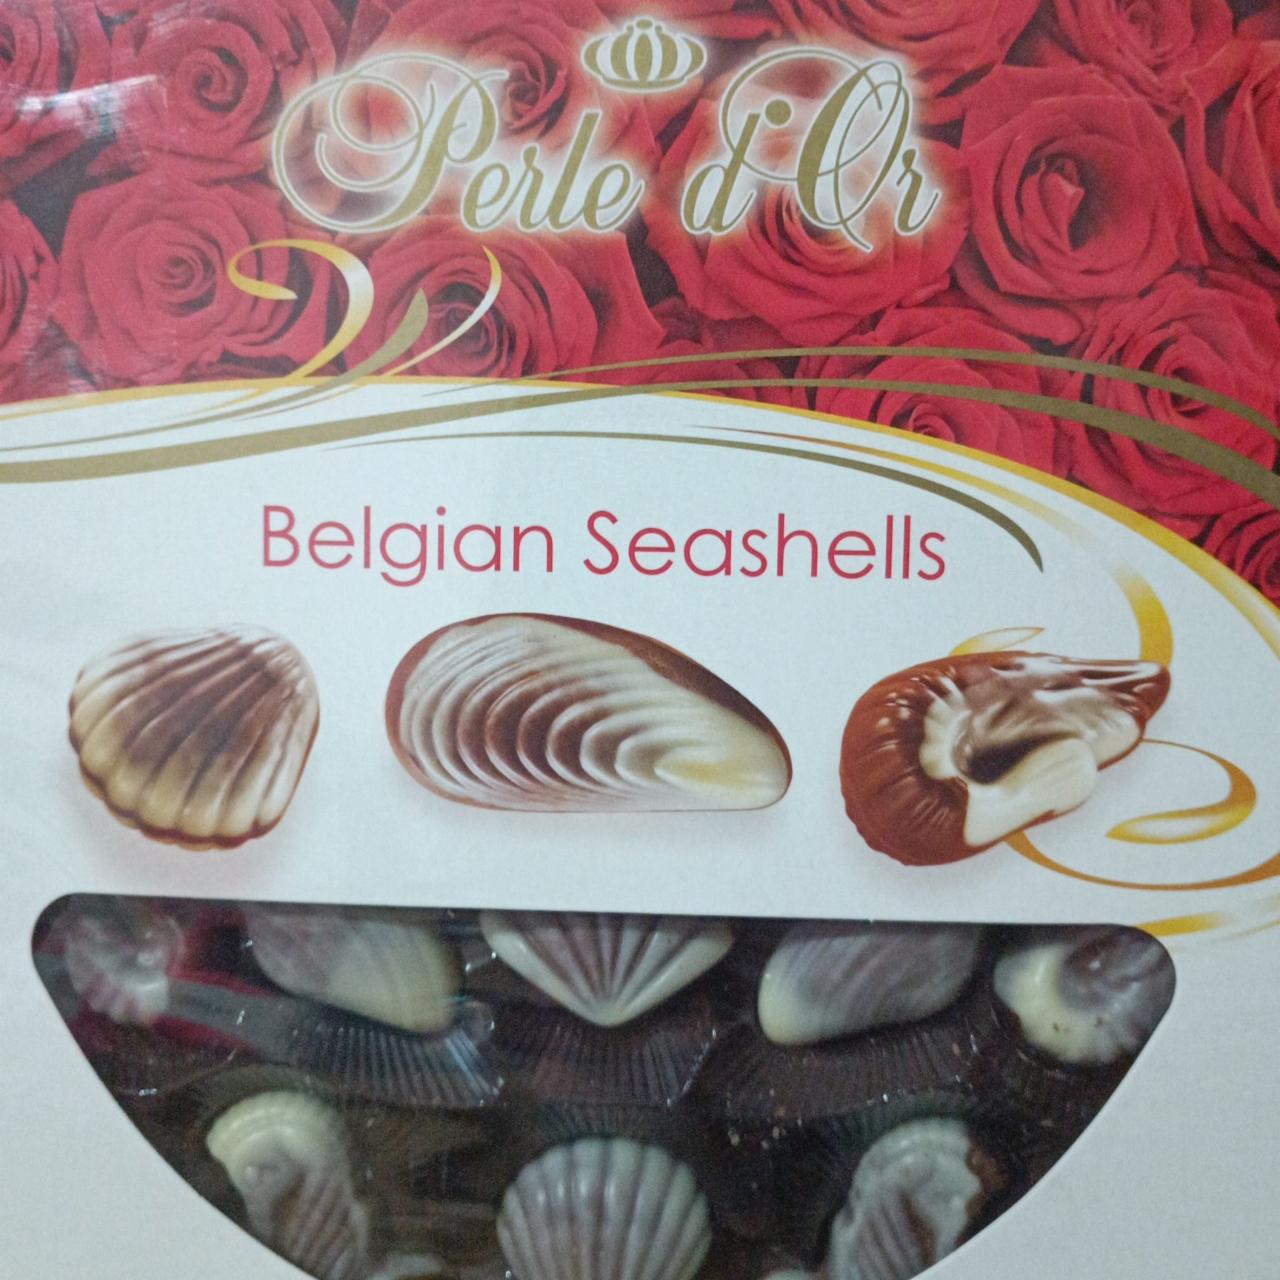 Фото - бельгийский шоколад ракушки Perle d'Or